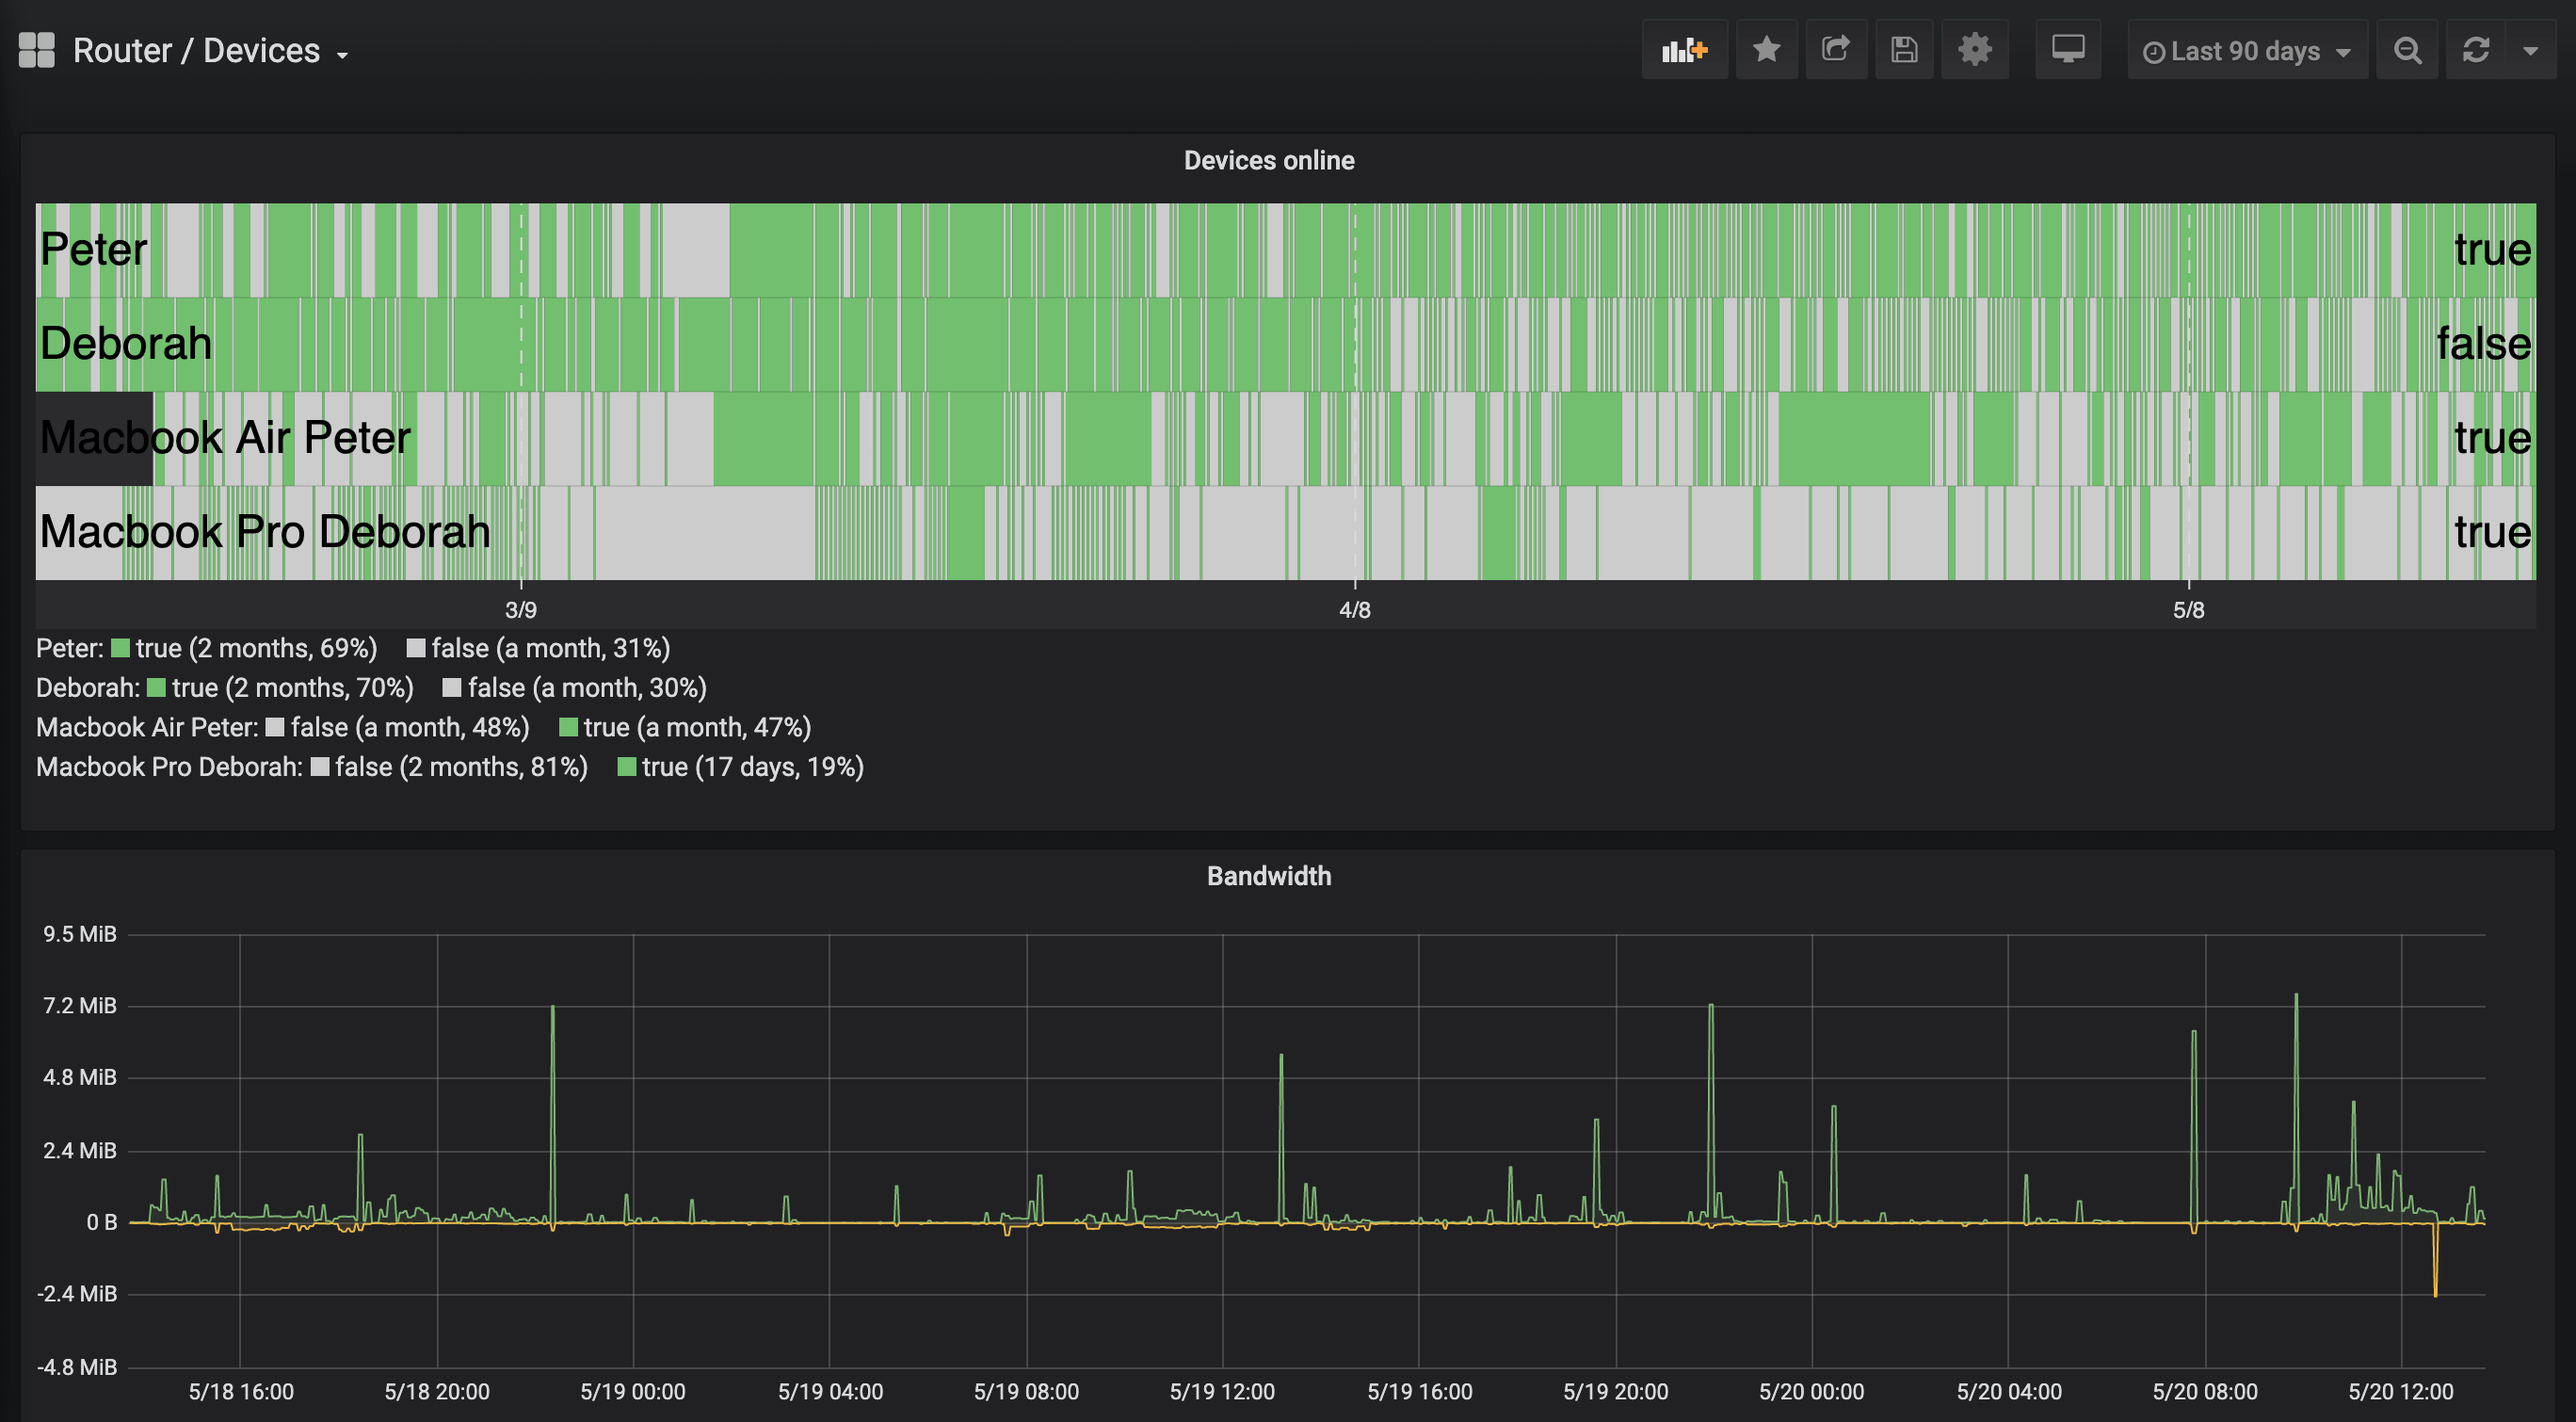 RouterAPI / device based presence tracking